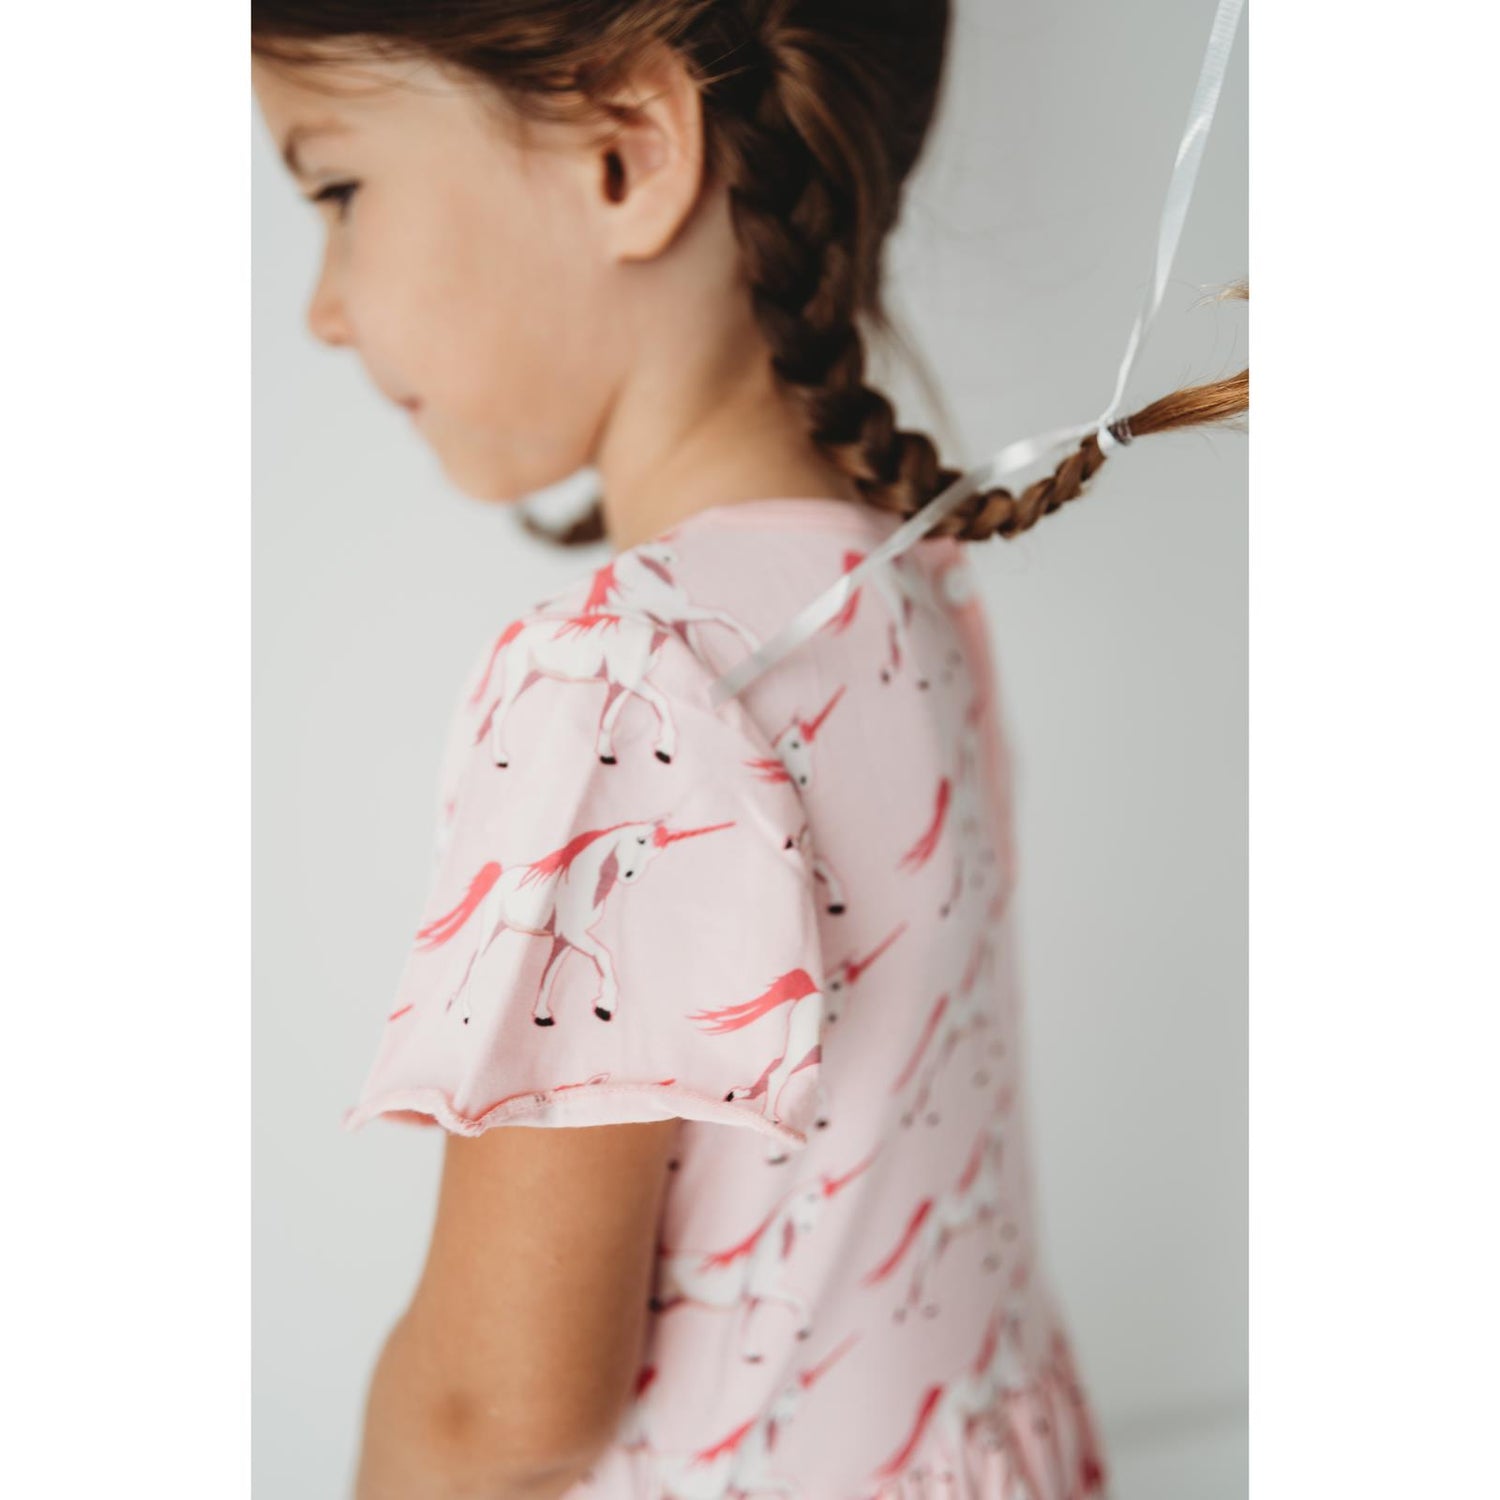 Print Flutter Sleeve Twirl Dress with Pockets in Cake Pop Prancing Unicorn